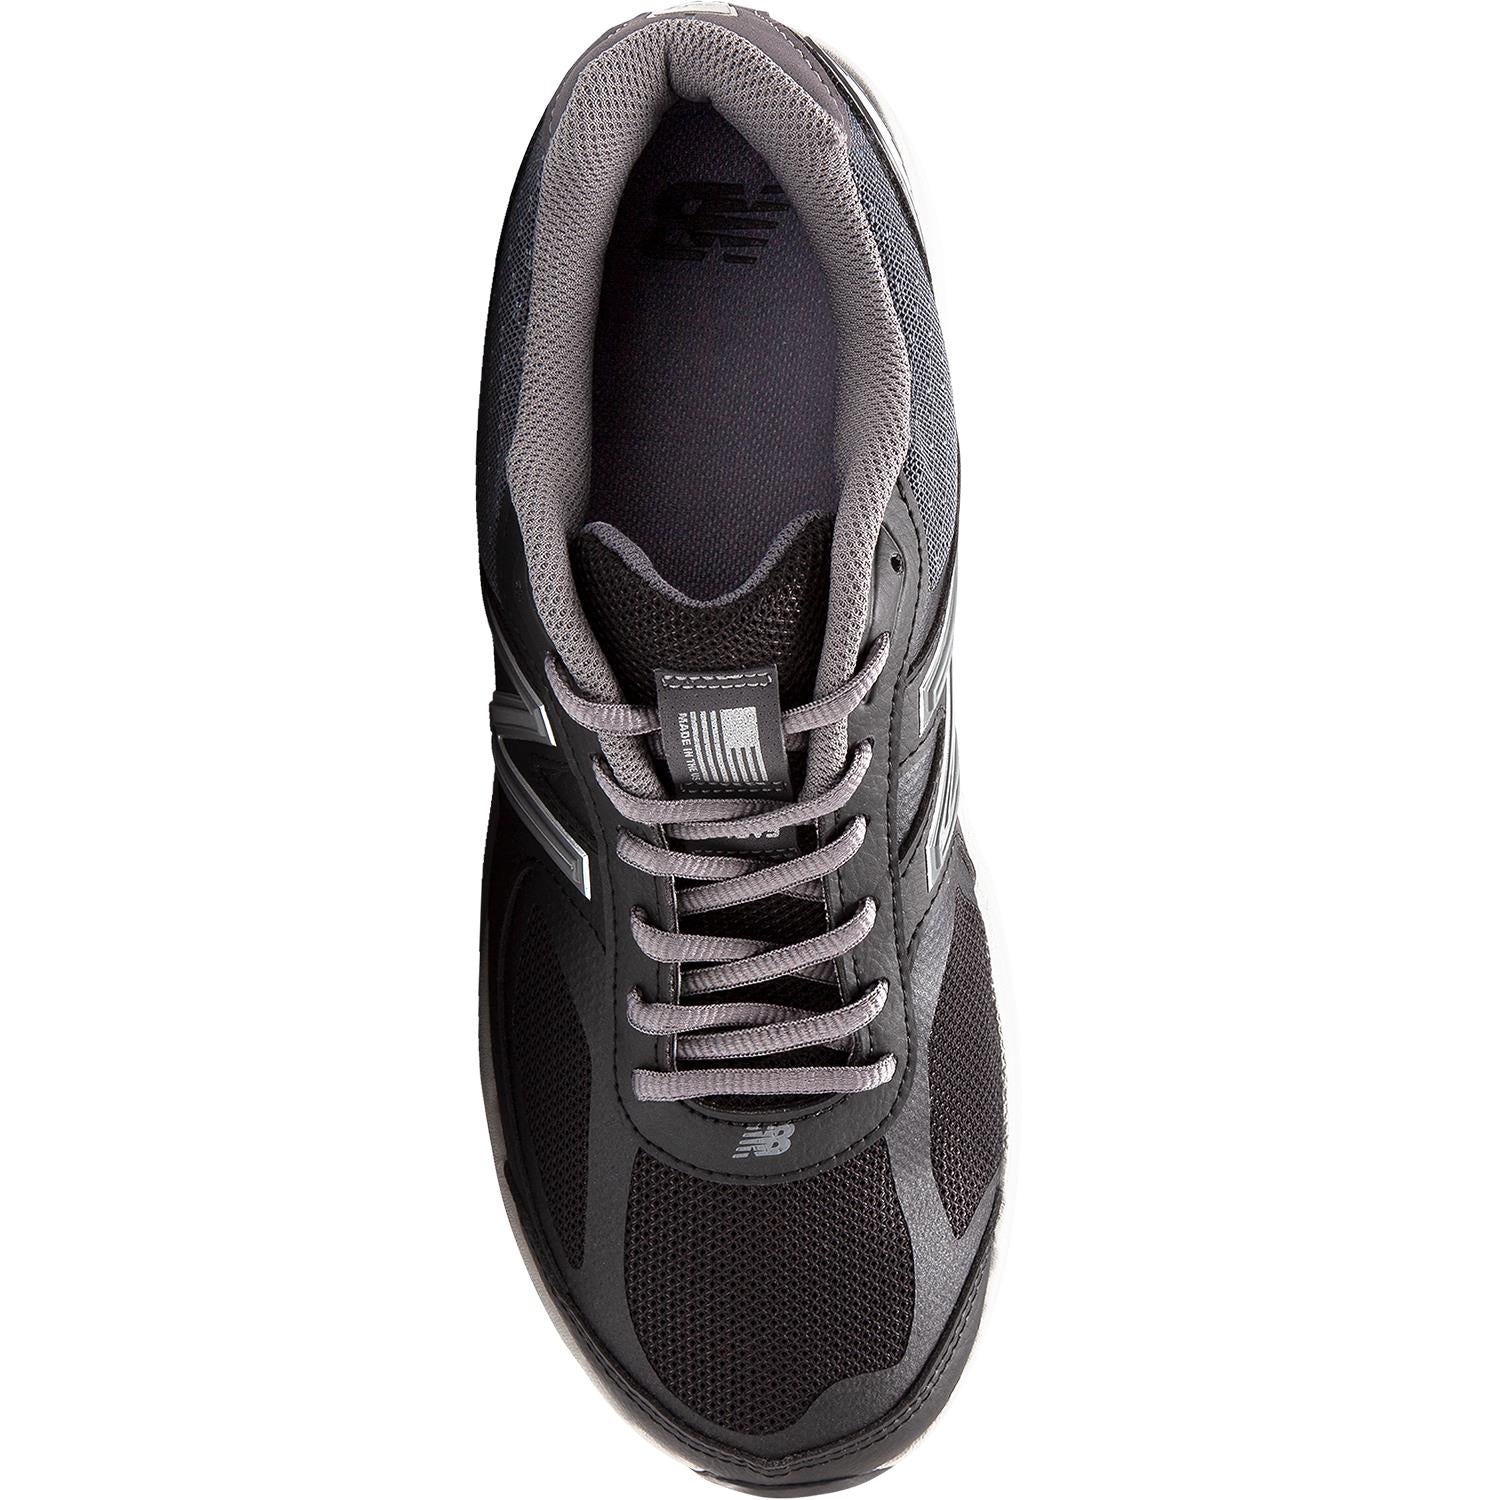 New Balance M1540v3 | Men's Running Shoes | Footwear etc.